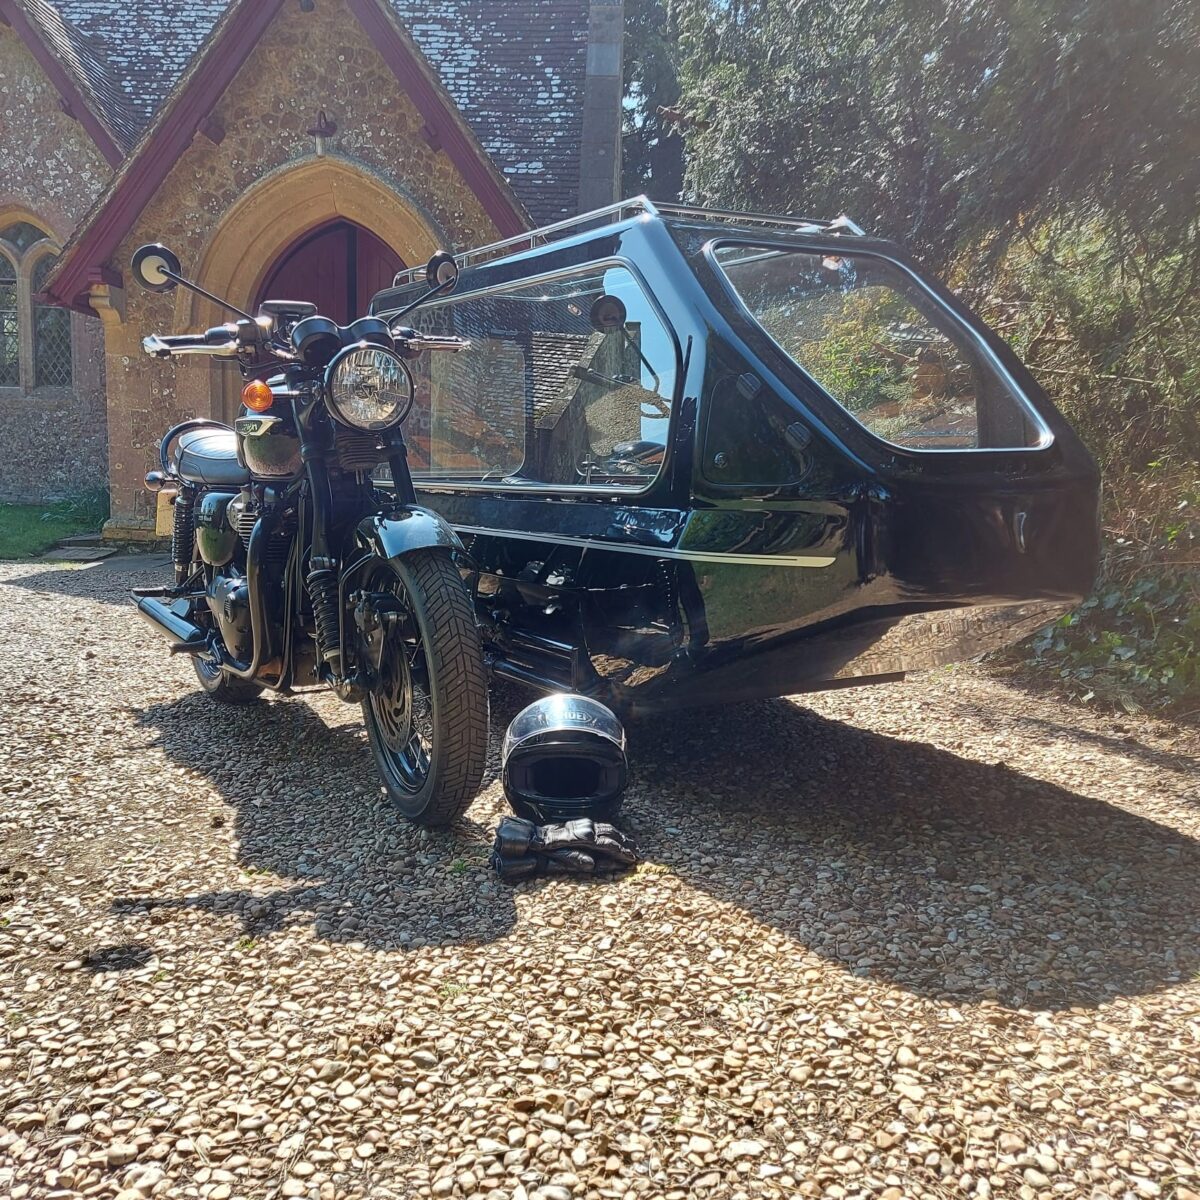 Black Triumph Bonneville Bike with side hearse outside church